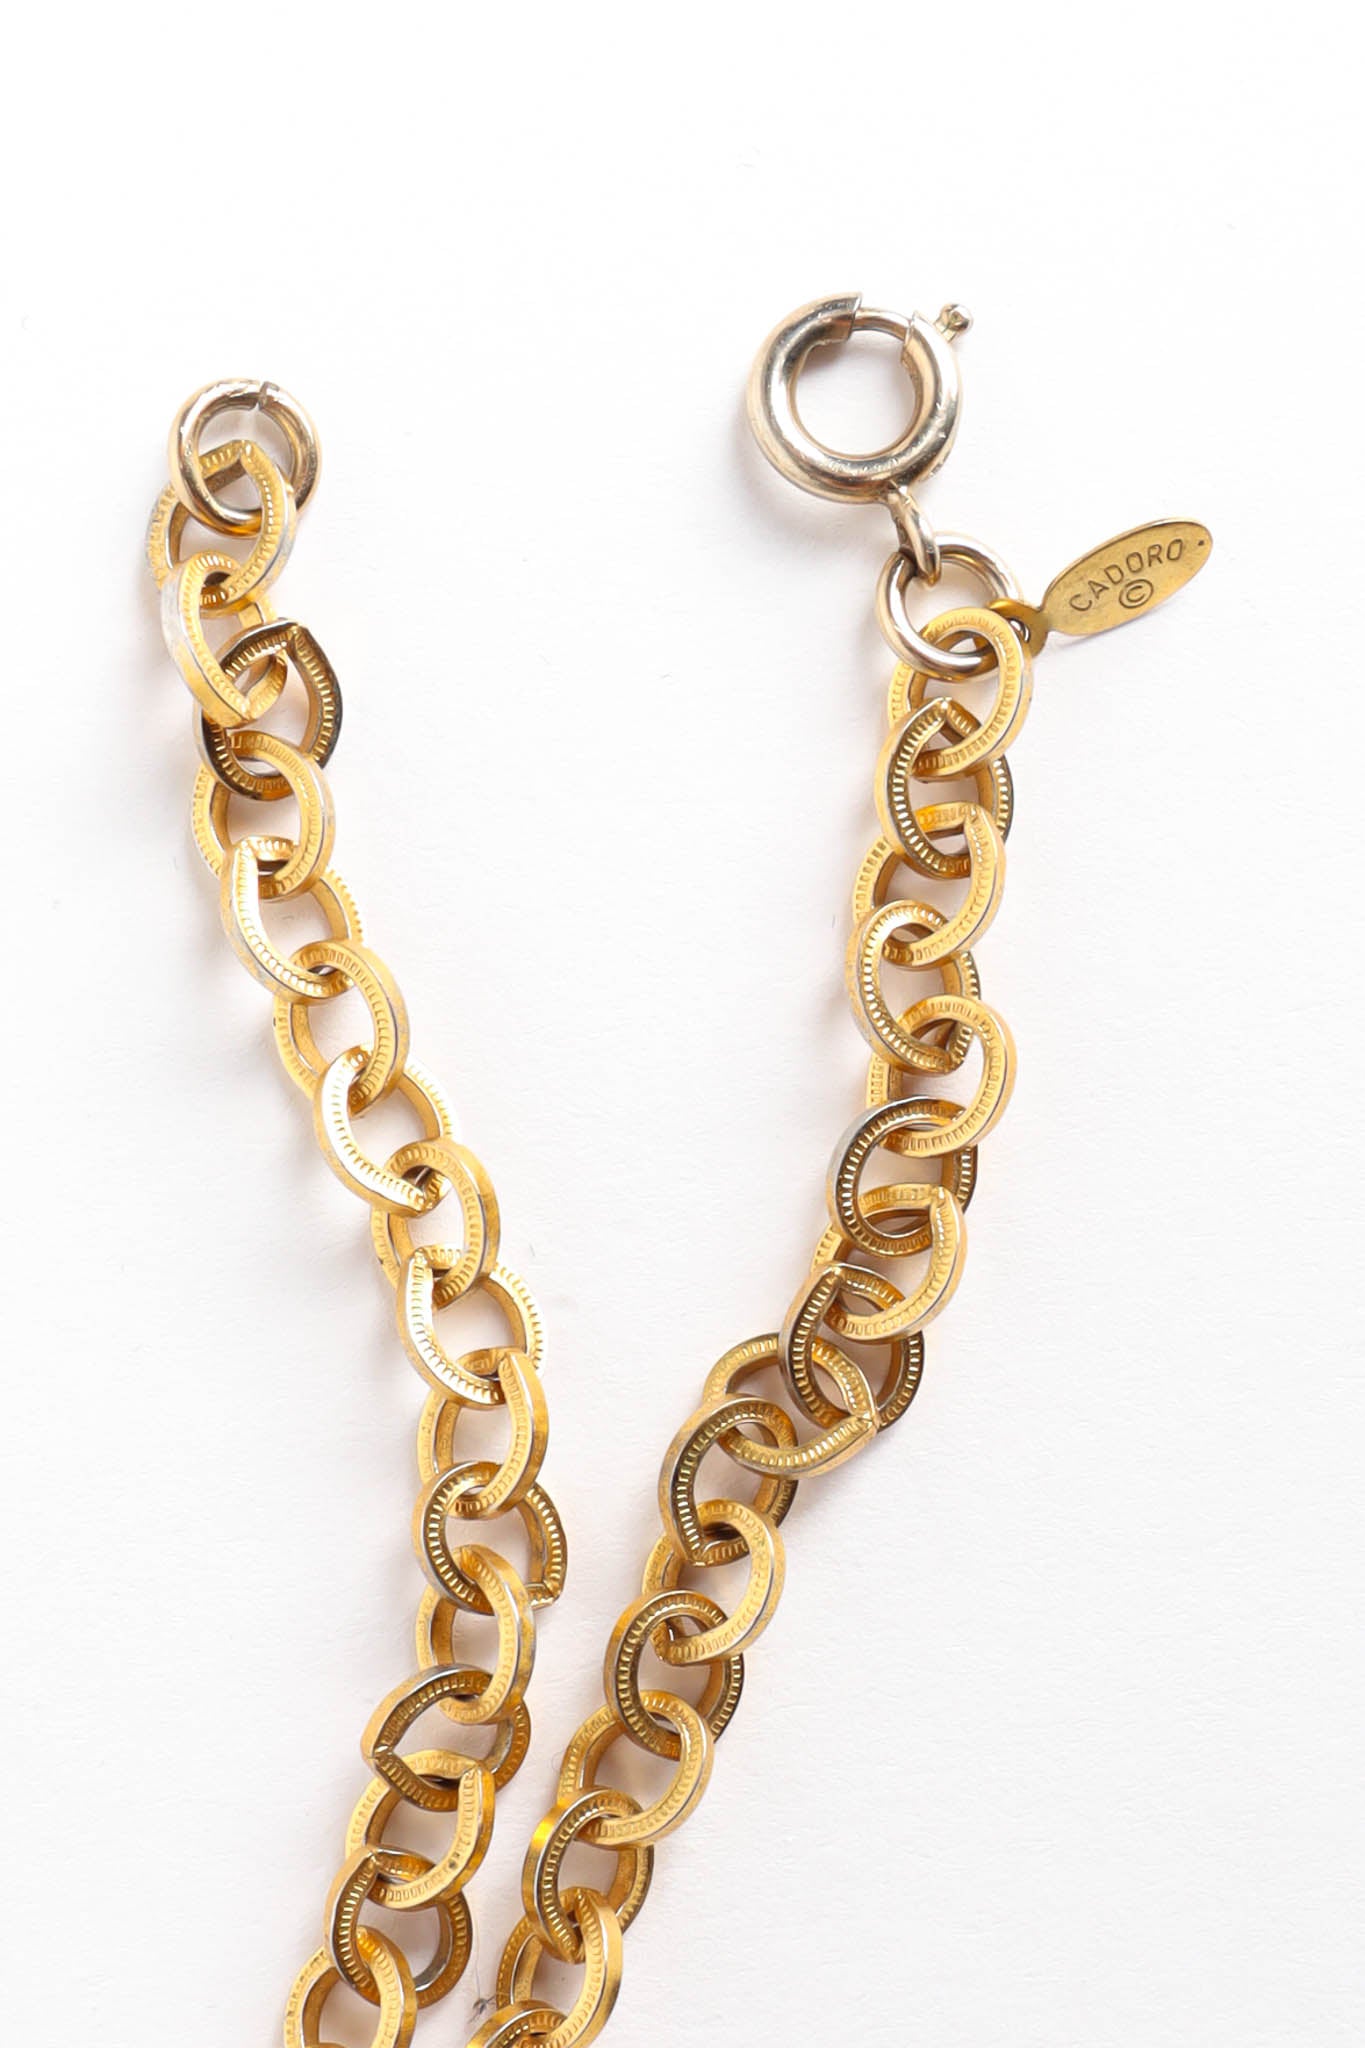 Vintage Cadoro Celtic Knot Pendant Necklace spring clasp/ signed hang tag@ Recess Los Angeles